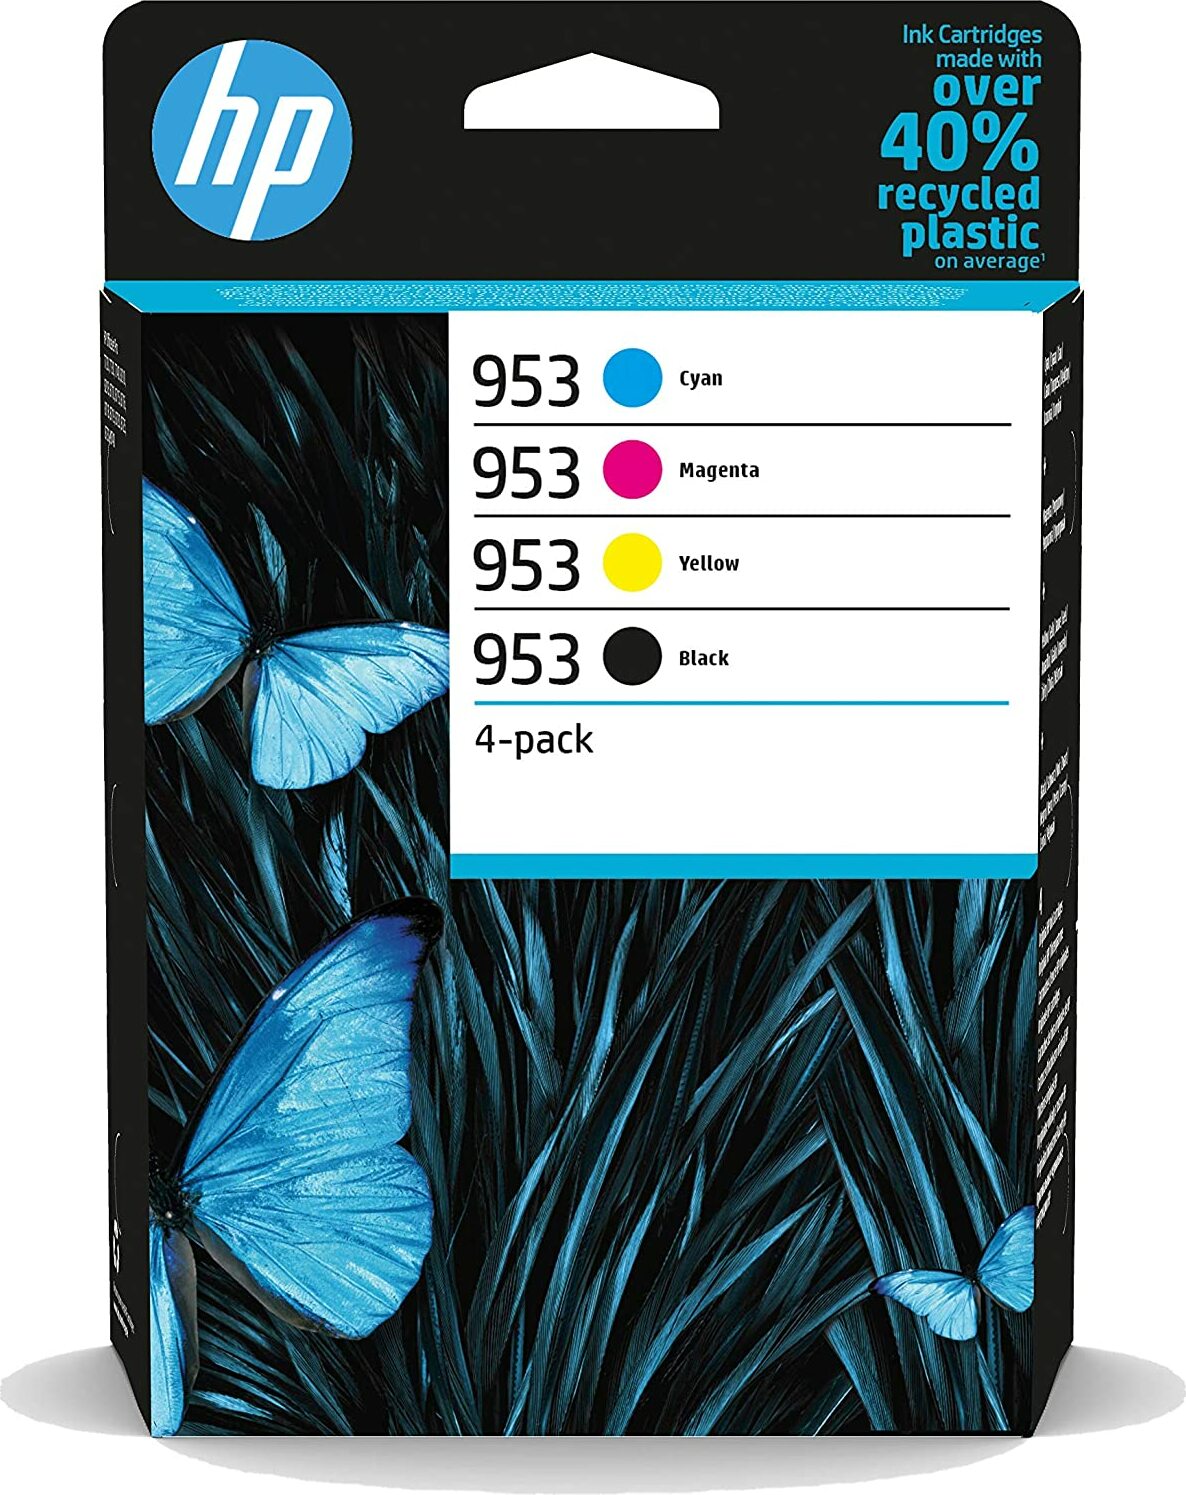 HP Officejet Pro 8730, mit teilweise kompatiblen Patronen